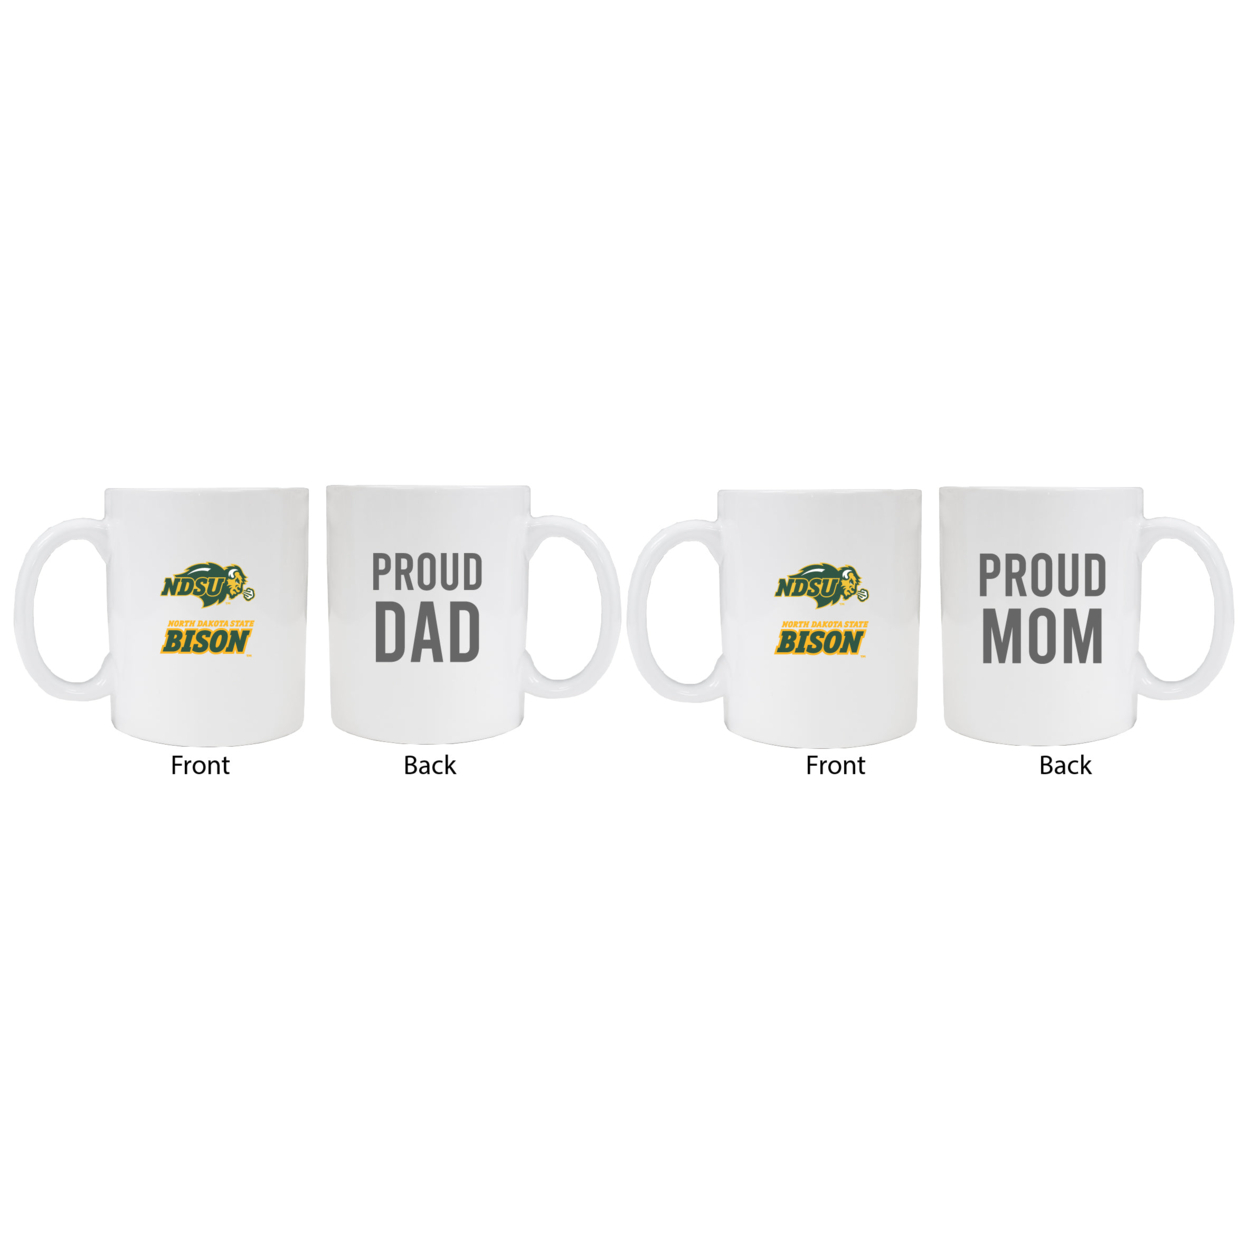 North Dakota State Bison Proud Mom And Dad White Ceramic Coffee Mug 2 Pack (White).